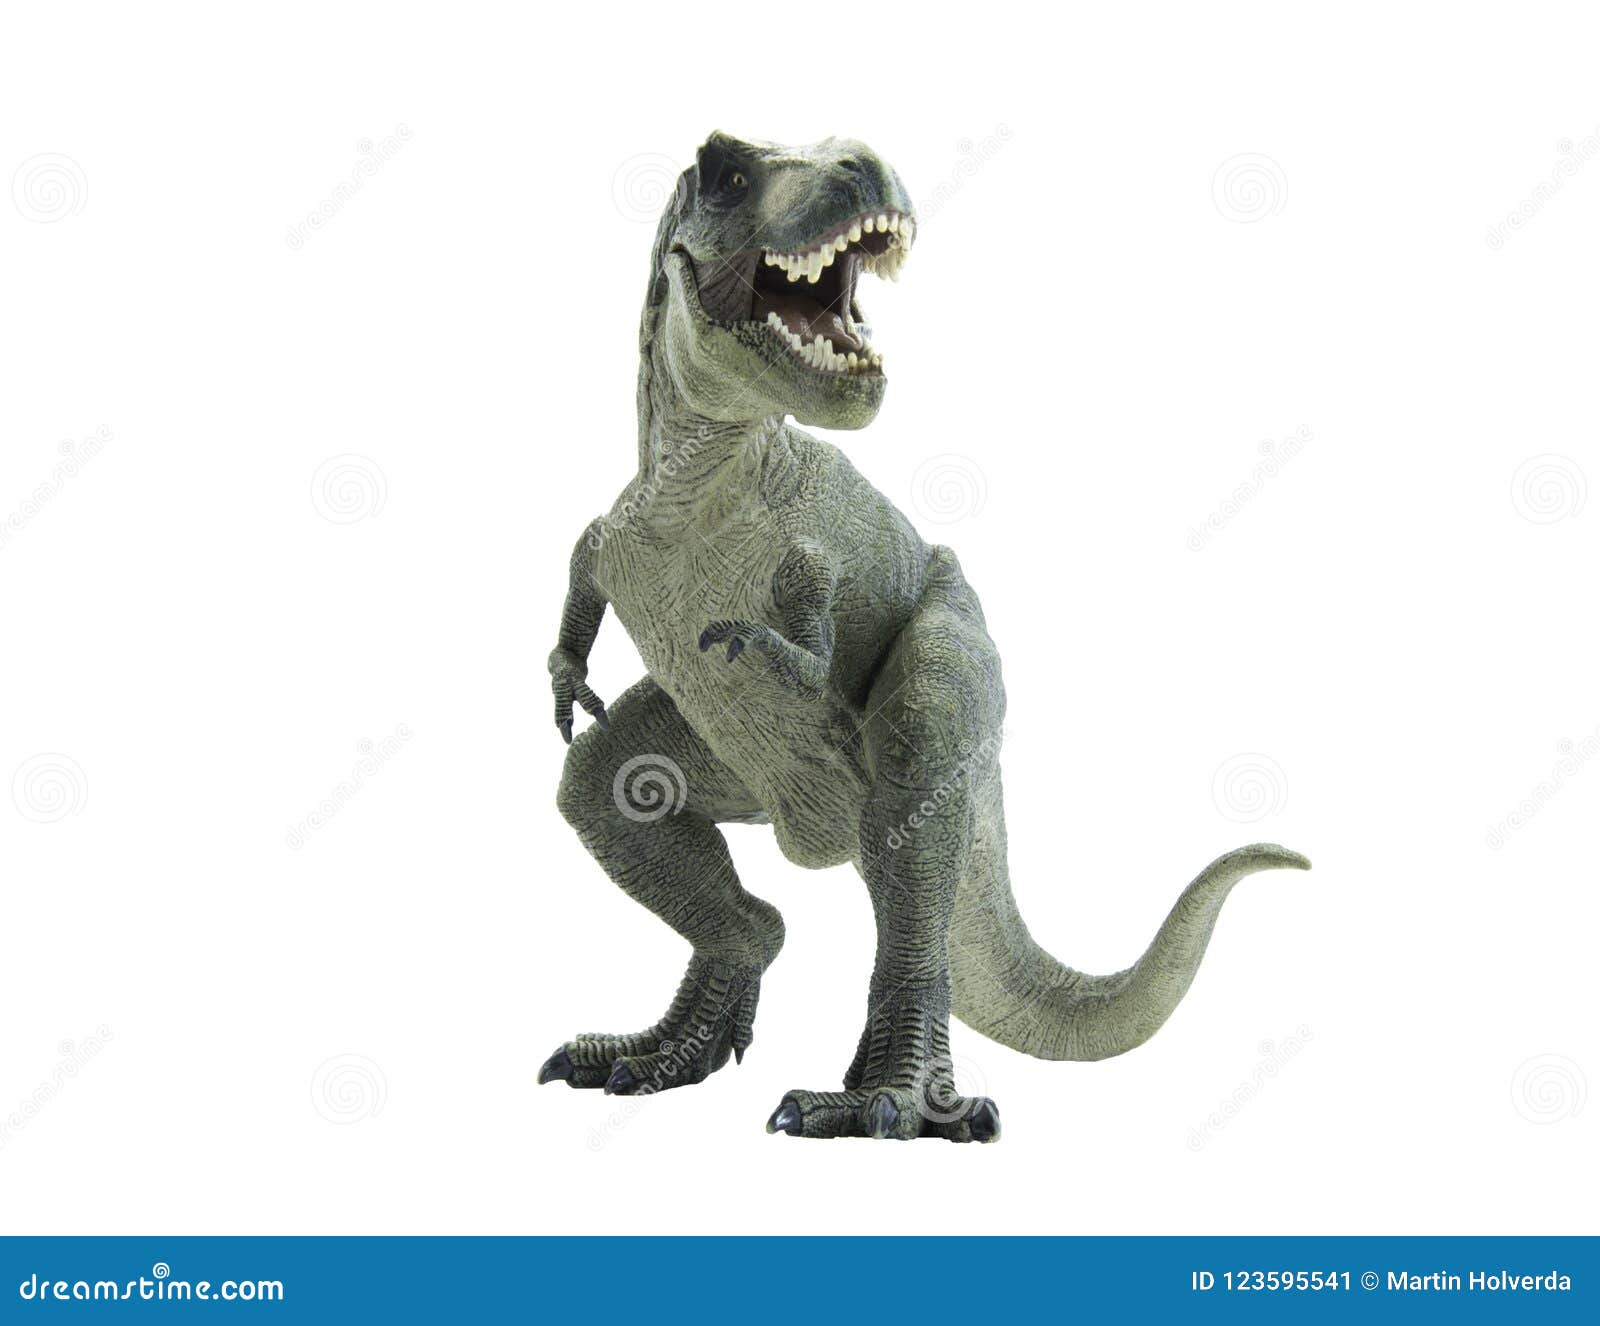 dinosaur tyrannosaurus rex also known as t rex